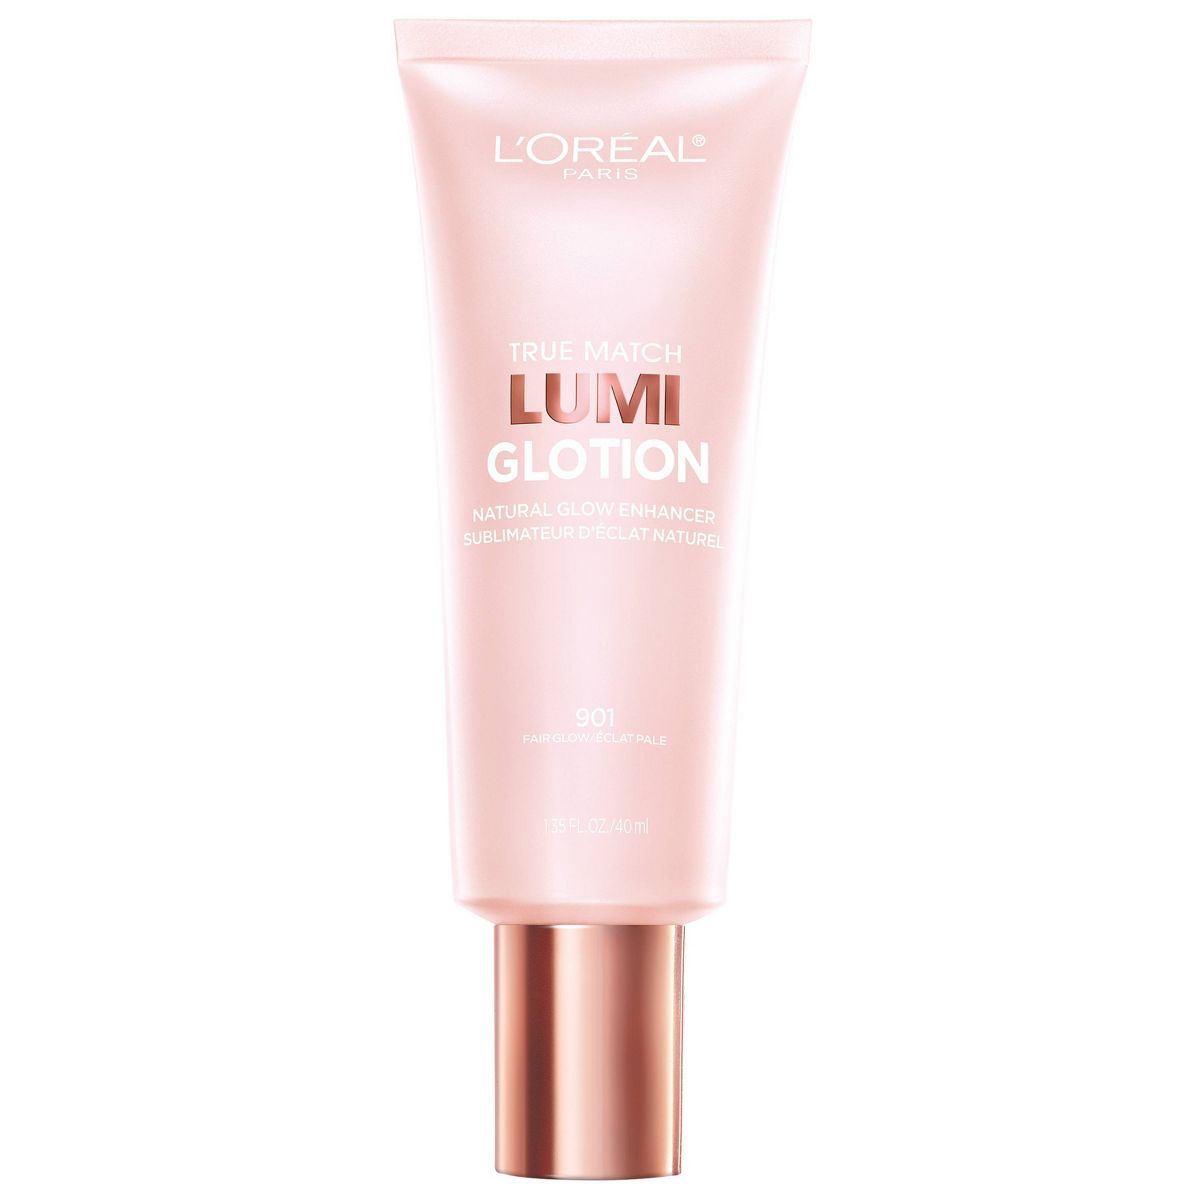 L'Oréal Paris True Match Lumi Glotion Natural Glow Enhancer - 1.35 fl oz | Target